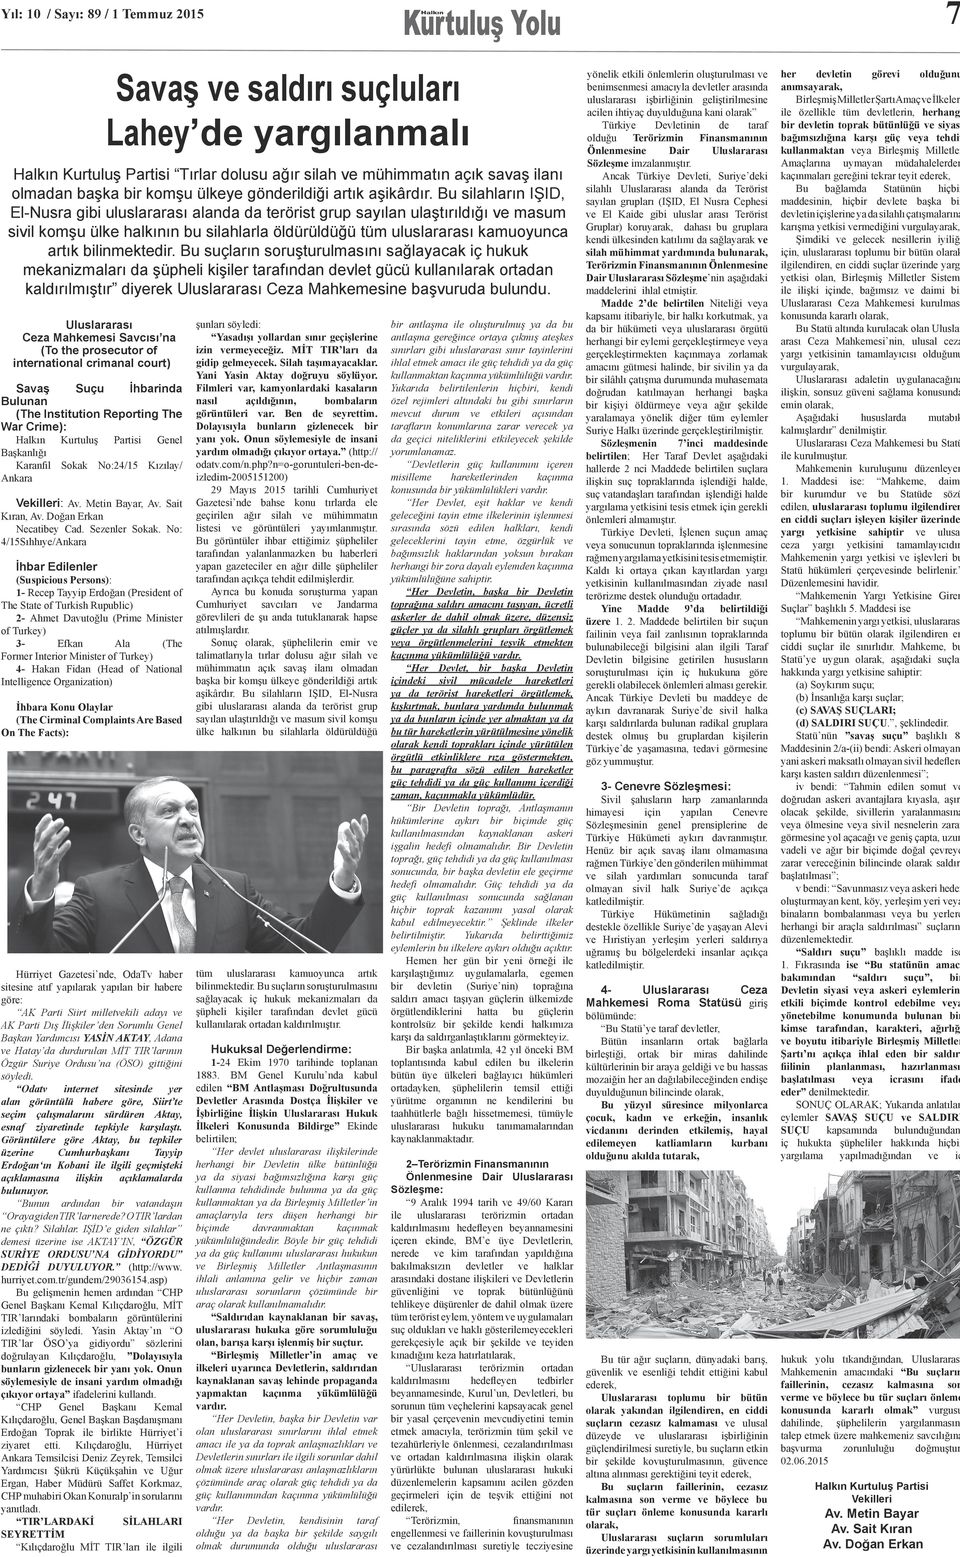 No: 4/15Sıhhıye/Ankara İhbar Edilenler (Suspicious Persons): 1- Recep Tayyip Erdoğan (President of The State of Turkish Rupublic) 2- Ahmet Davutoğlu (Prime Minister of Turkey) 3- Efkan Ala (The